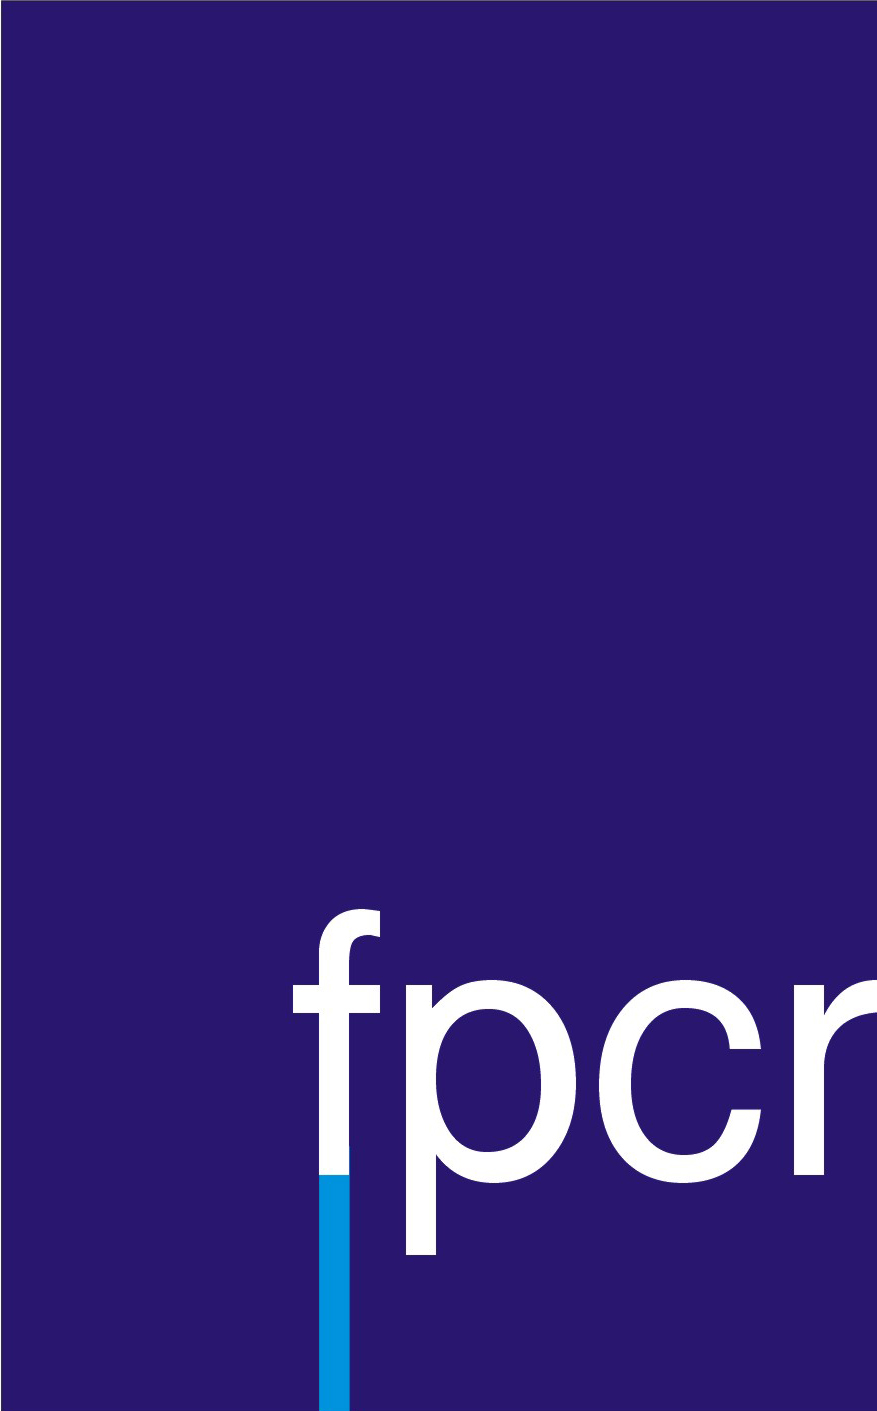 FPCR Environment and Design